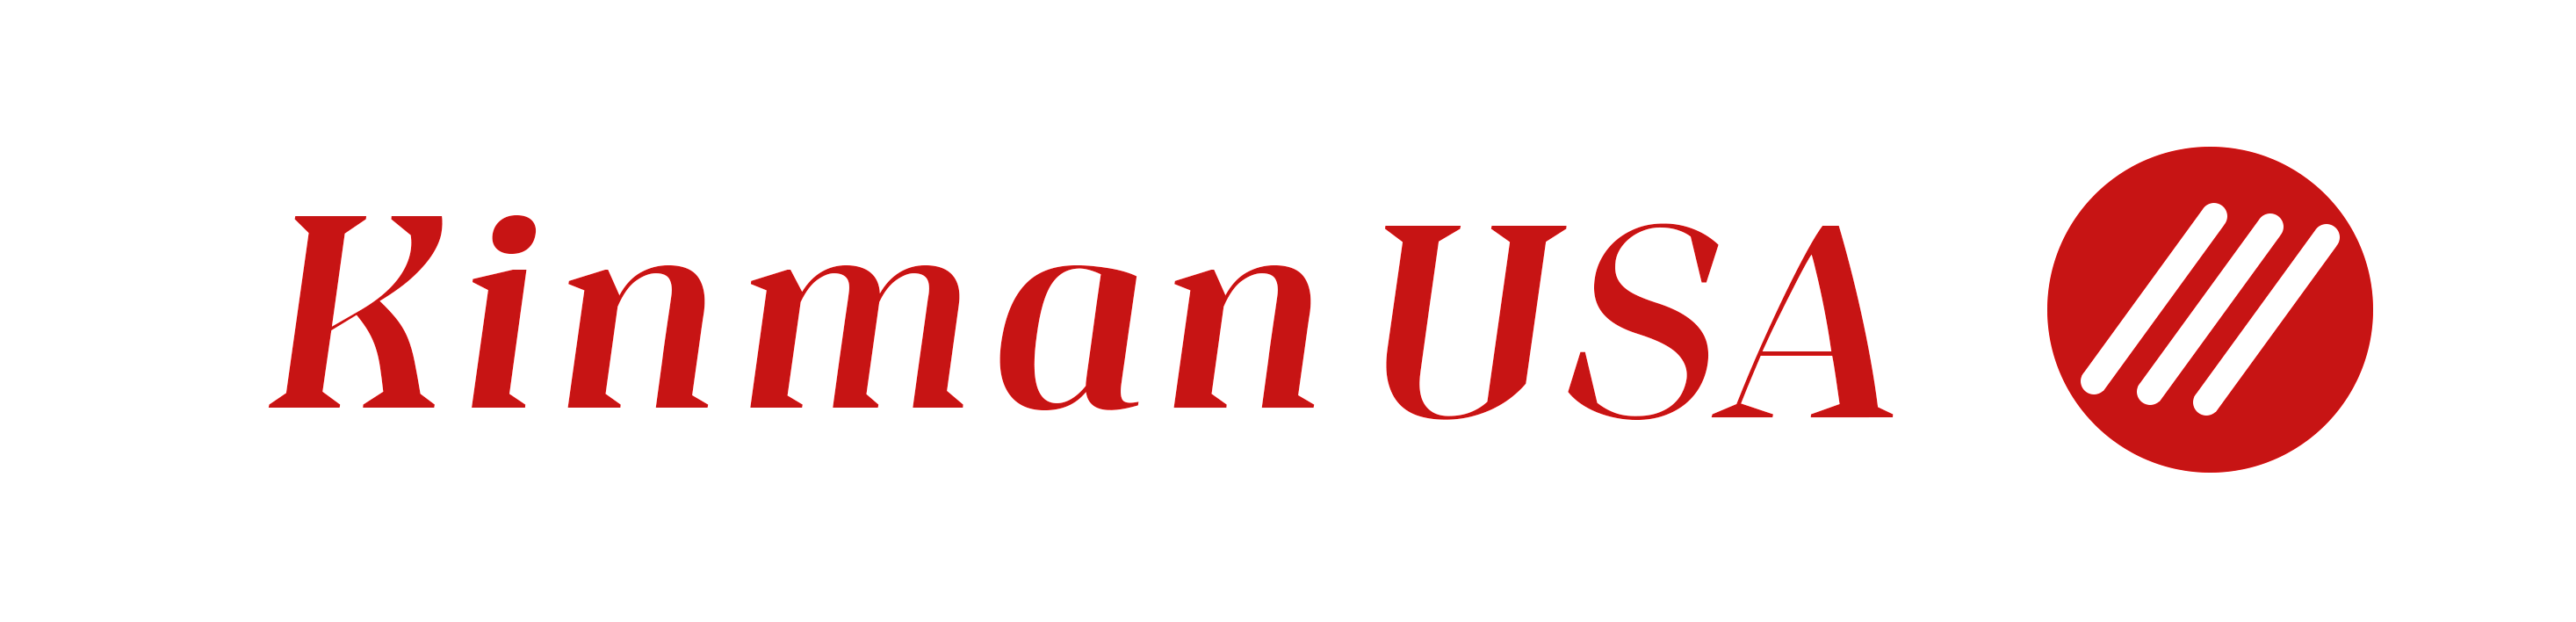 Kinman USA Logo